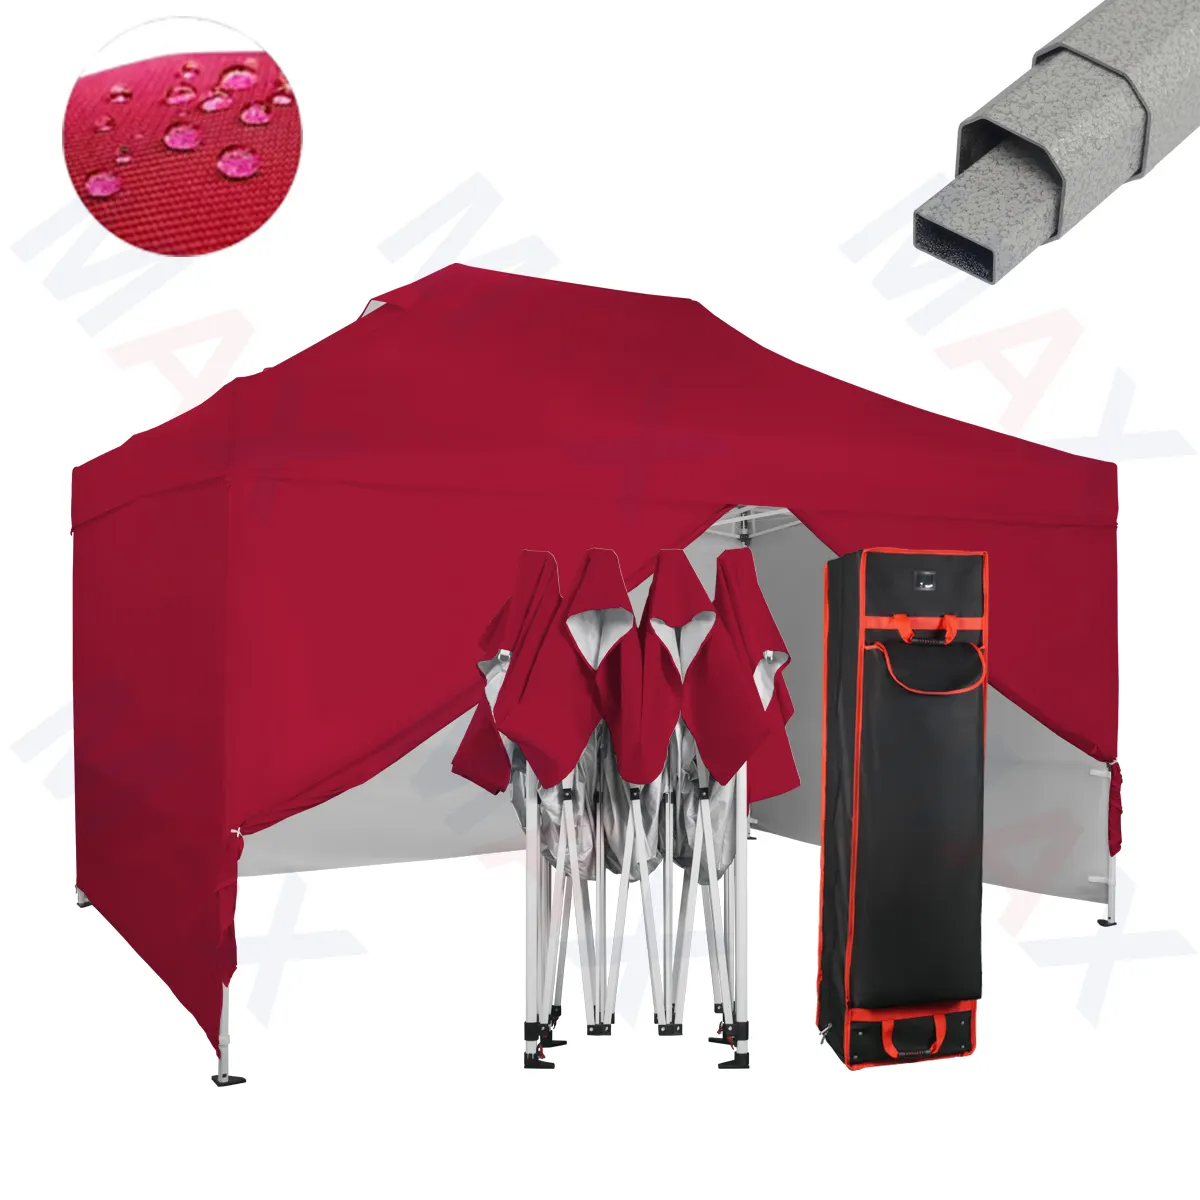 Best selling outdoor impermeável Octeel 1015 red sidewall kits dobrável pop up gazebo tenda dossel para barraca de praia